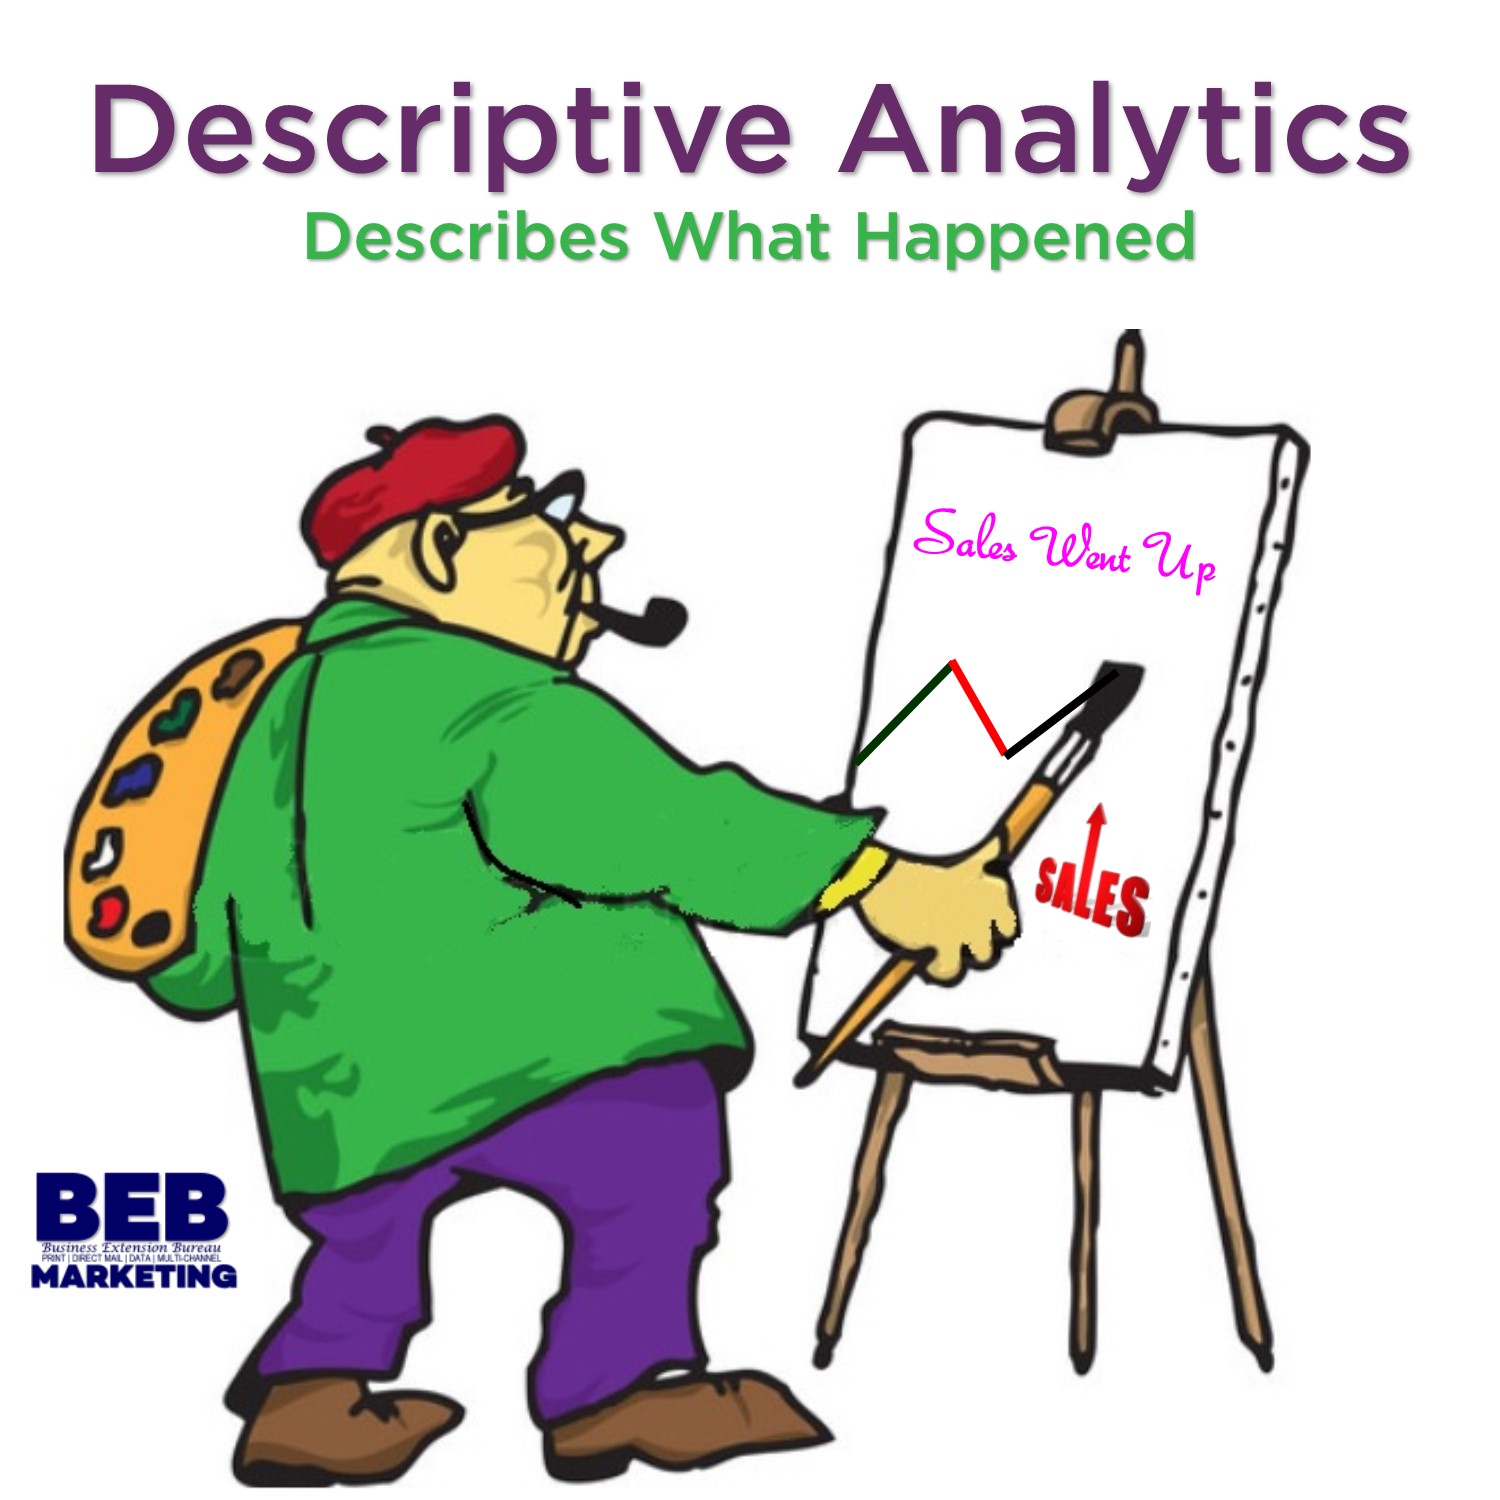 Download description. Descriptive Analytics. A) дескриптивная аналитик.